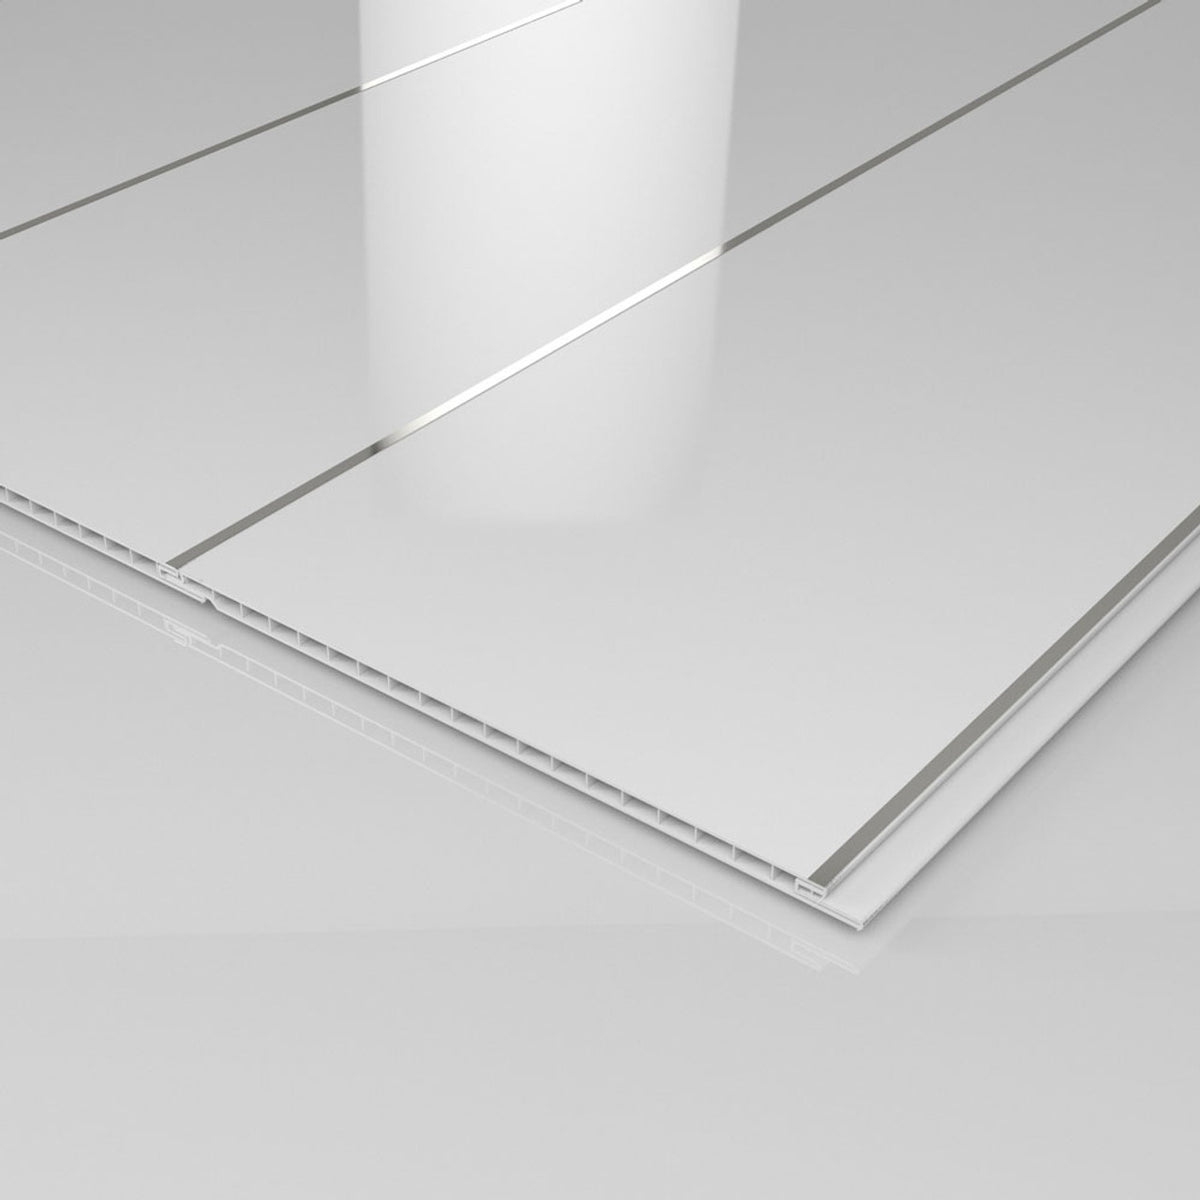 PVC Ceiling Panels - Single Chrome Gloss - 2.7m